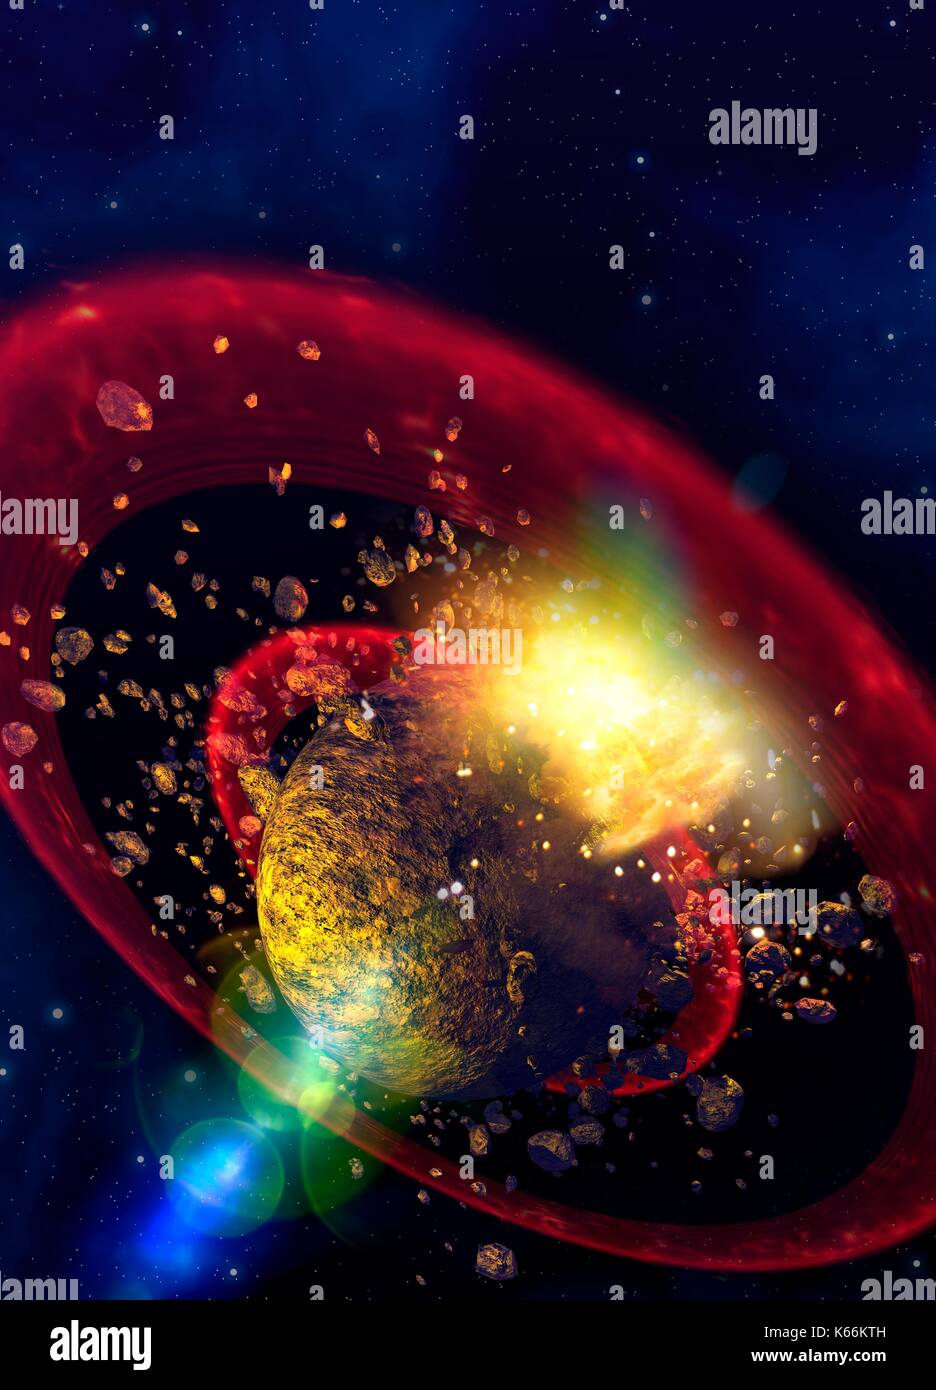 Planet exploding, illustration. Stock Photo